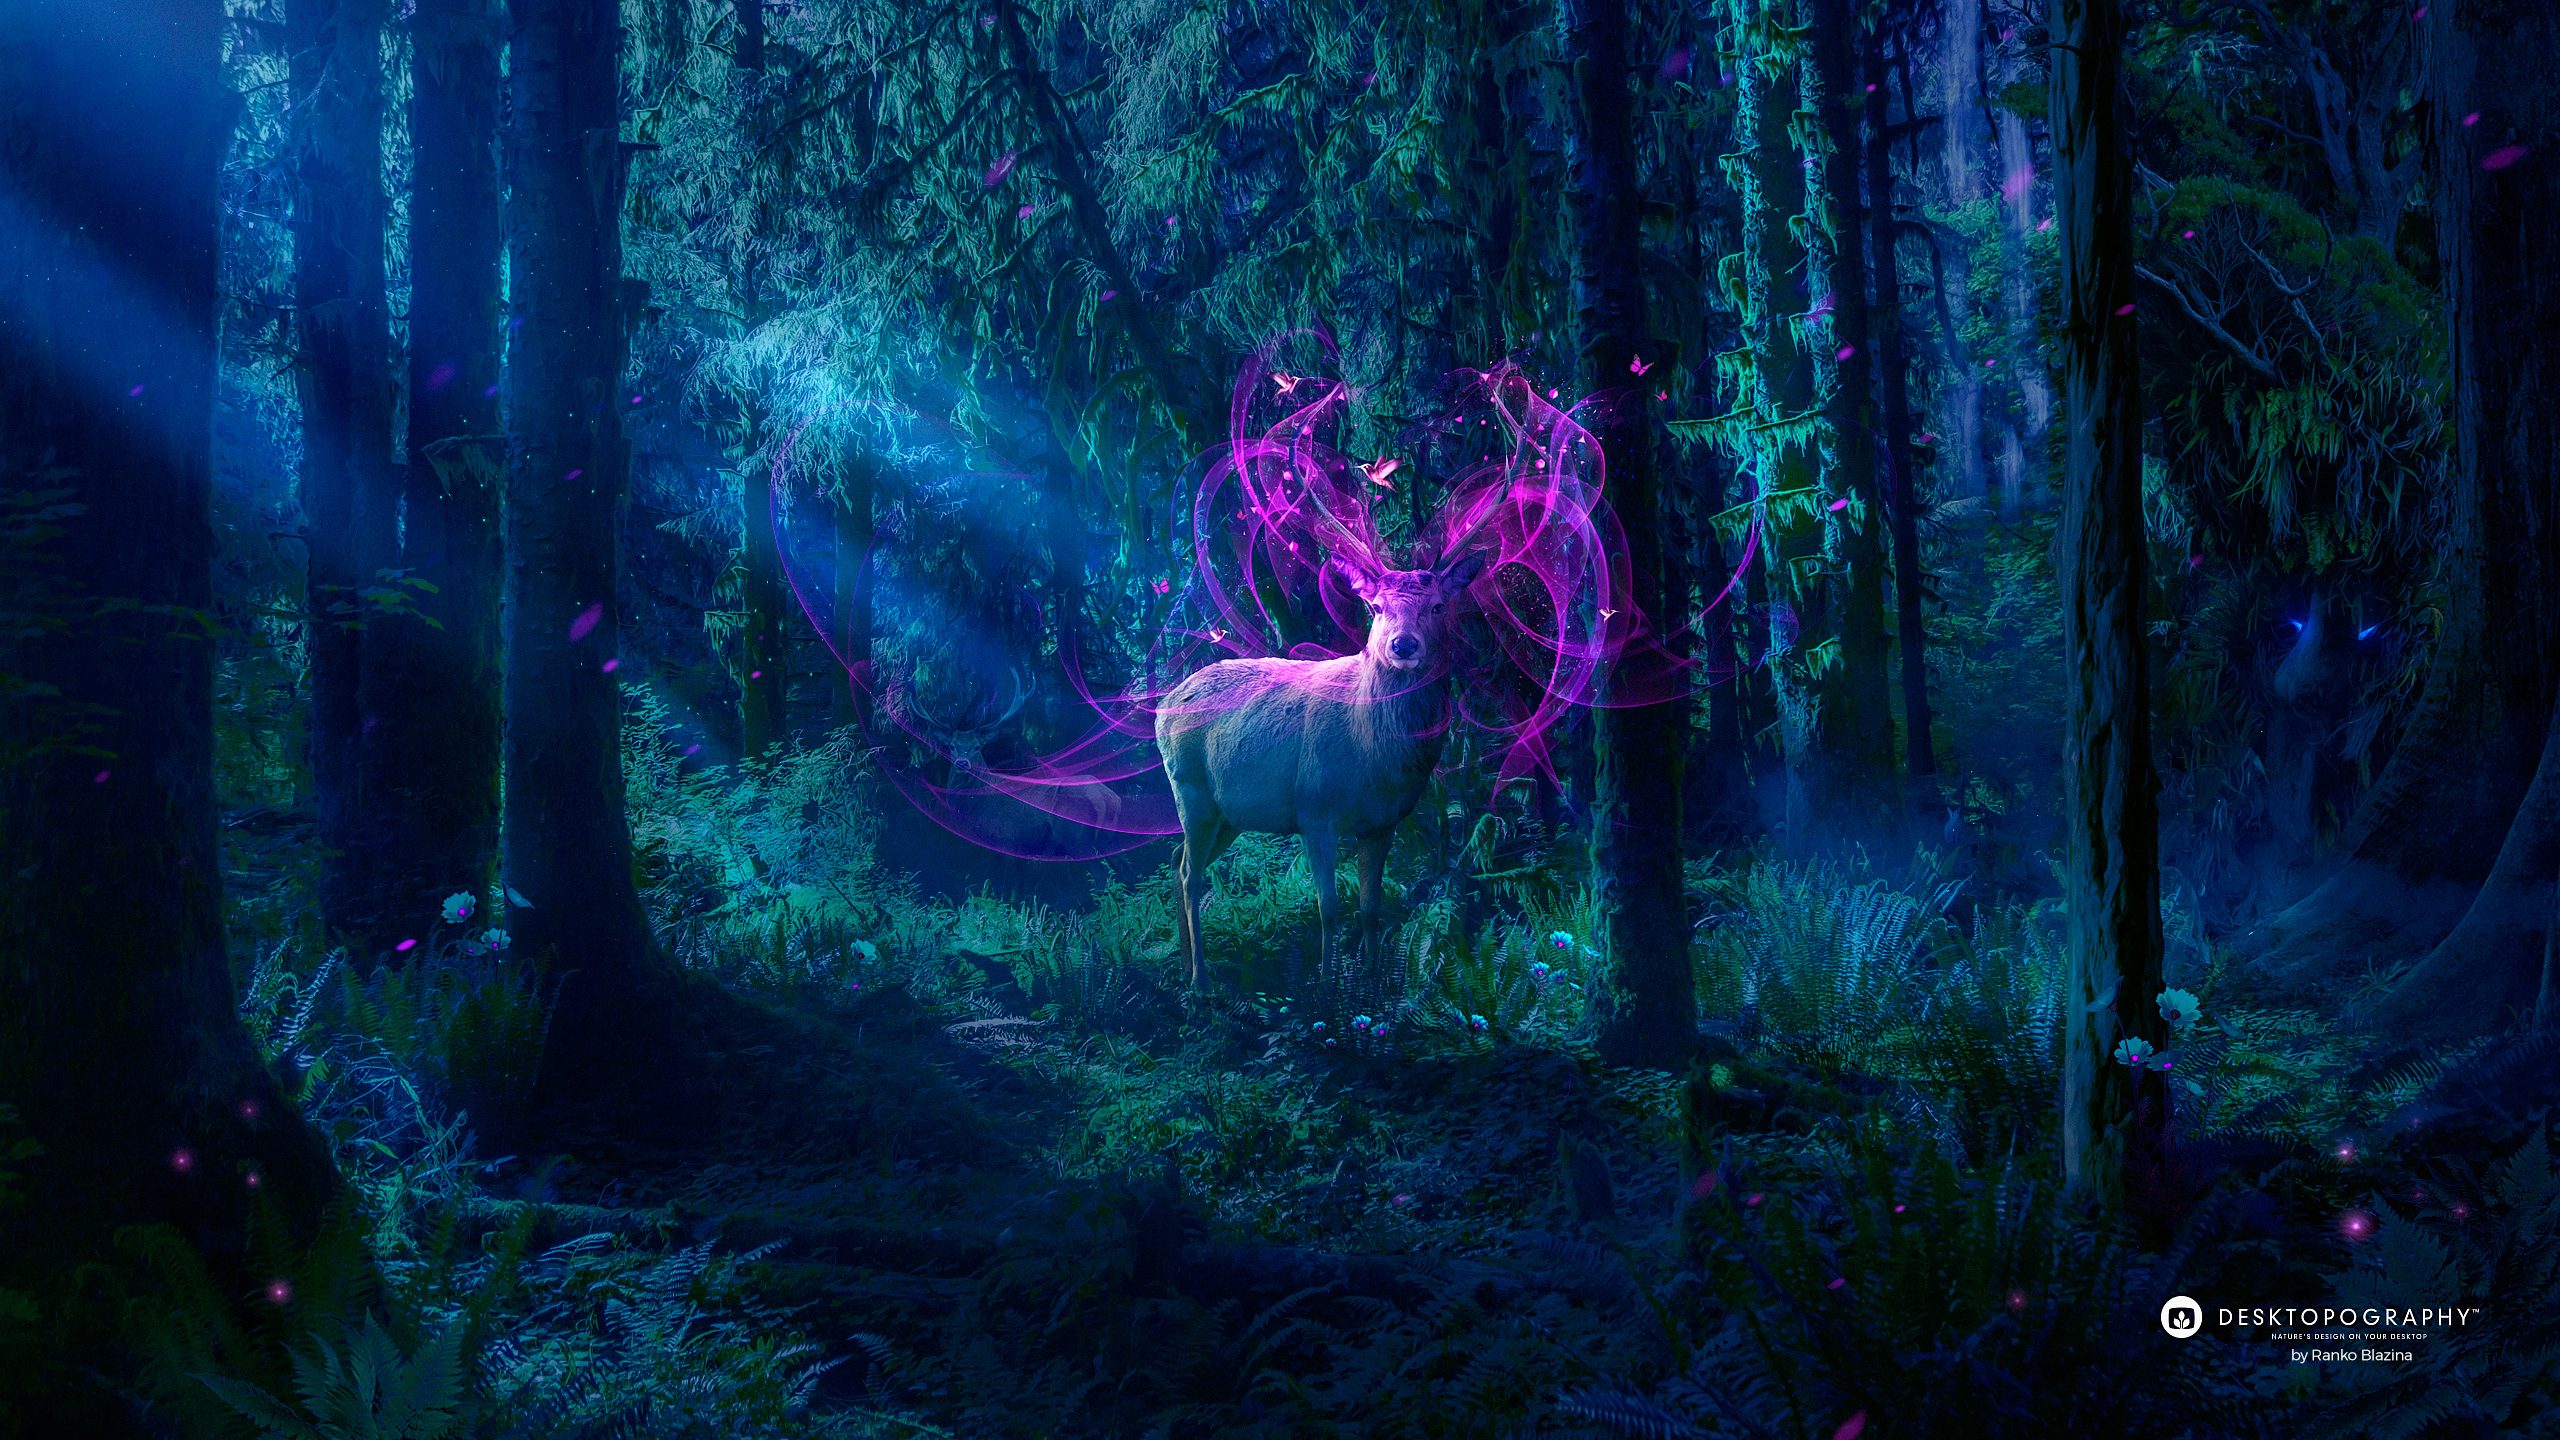 Magical forest - Desktopography